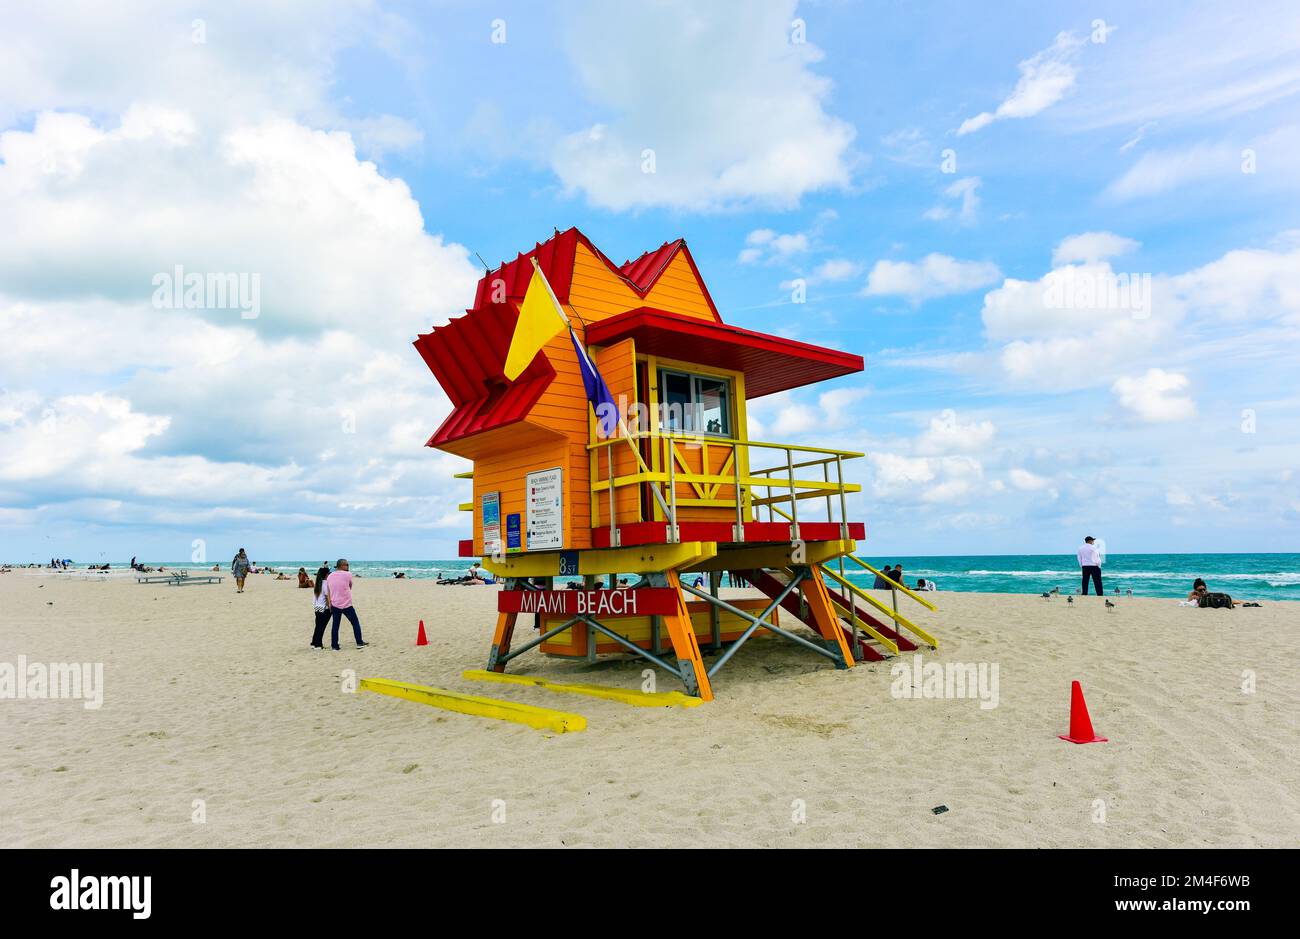 Colorful South Beach, Miami lifeguard shack on the beach in Miami, Florida. Stock Photo